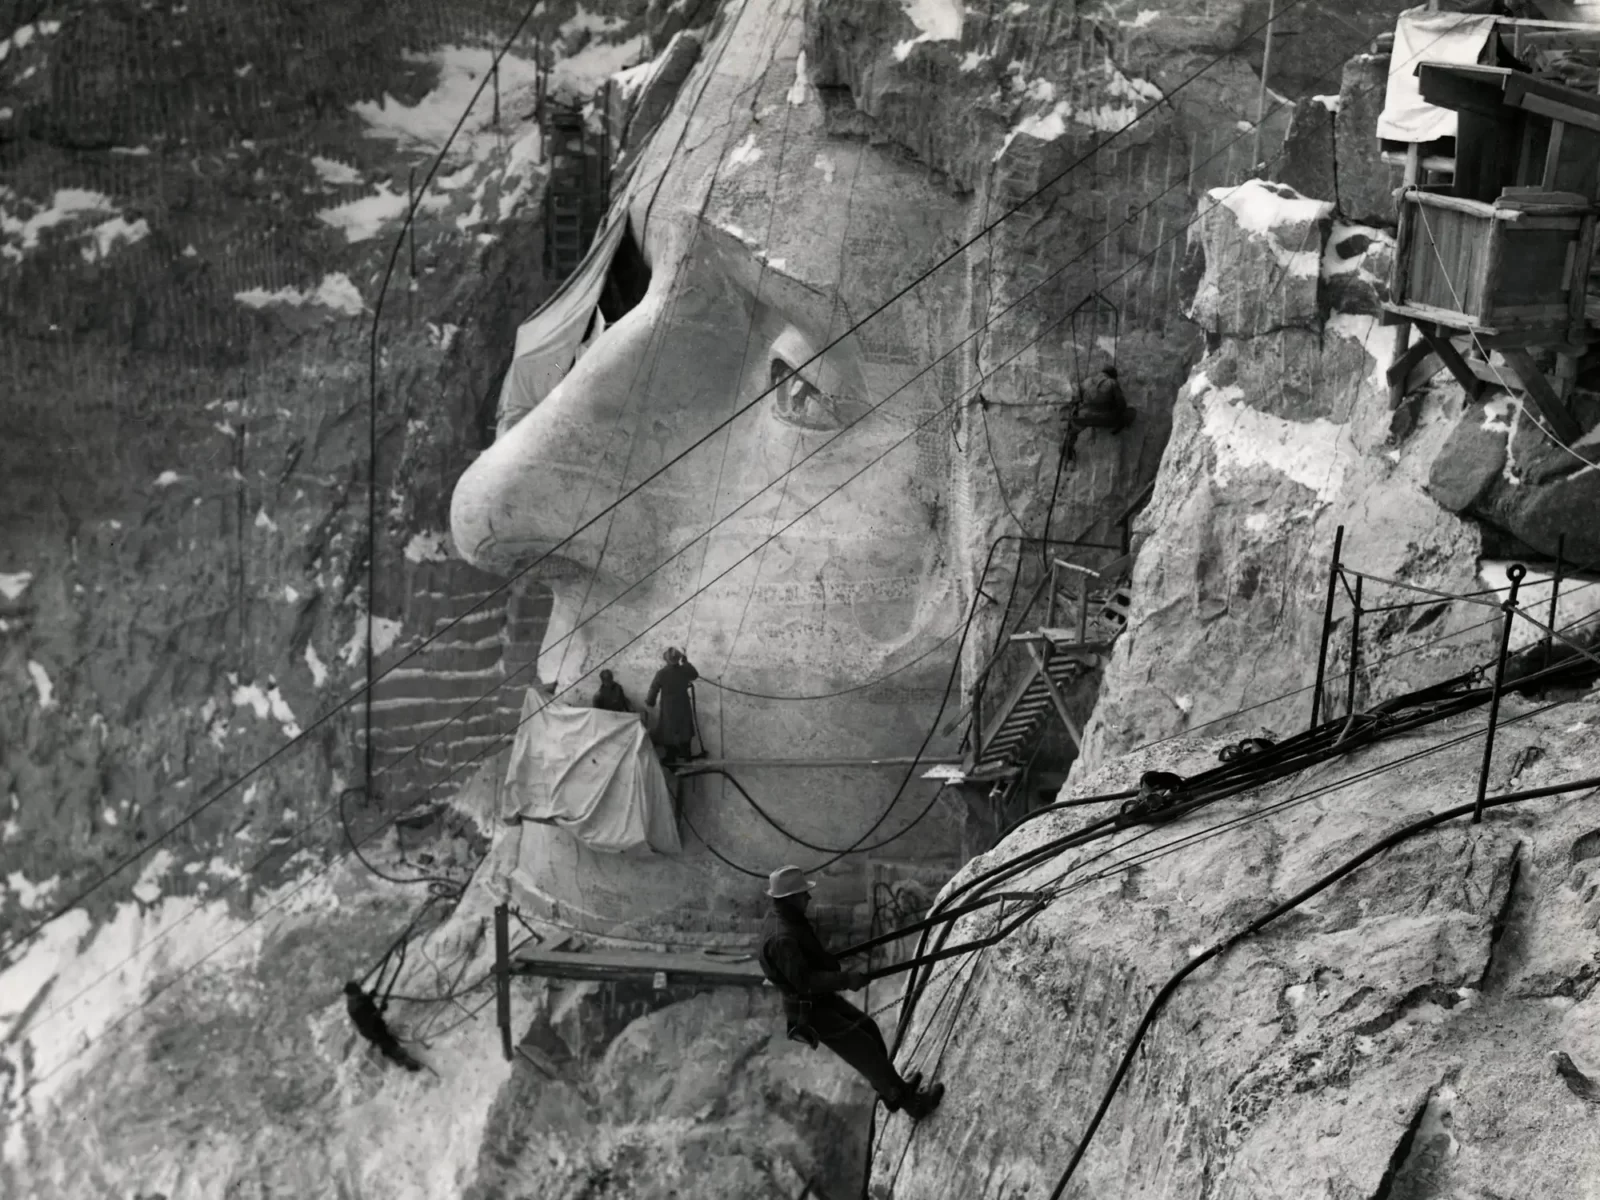 Mount Rushmore under construction